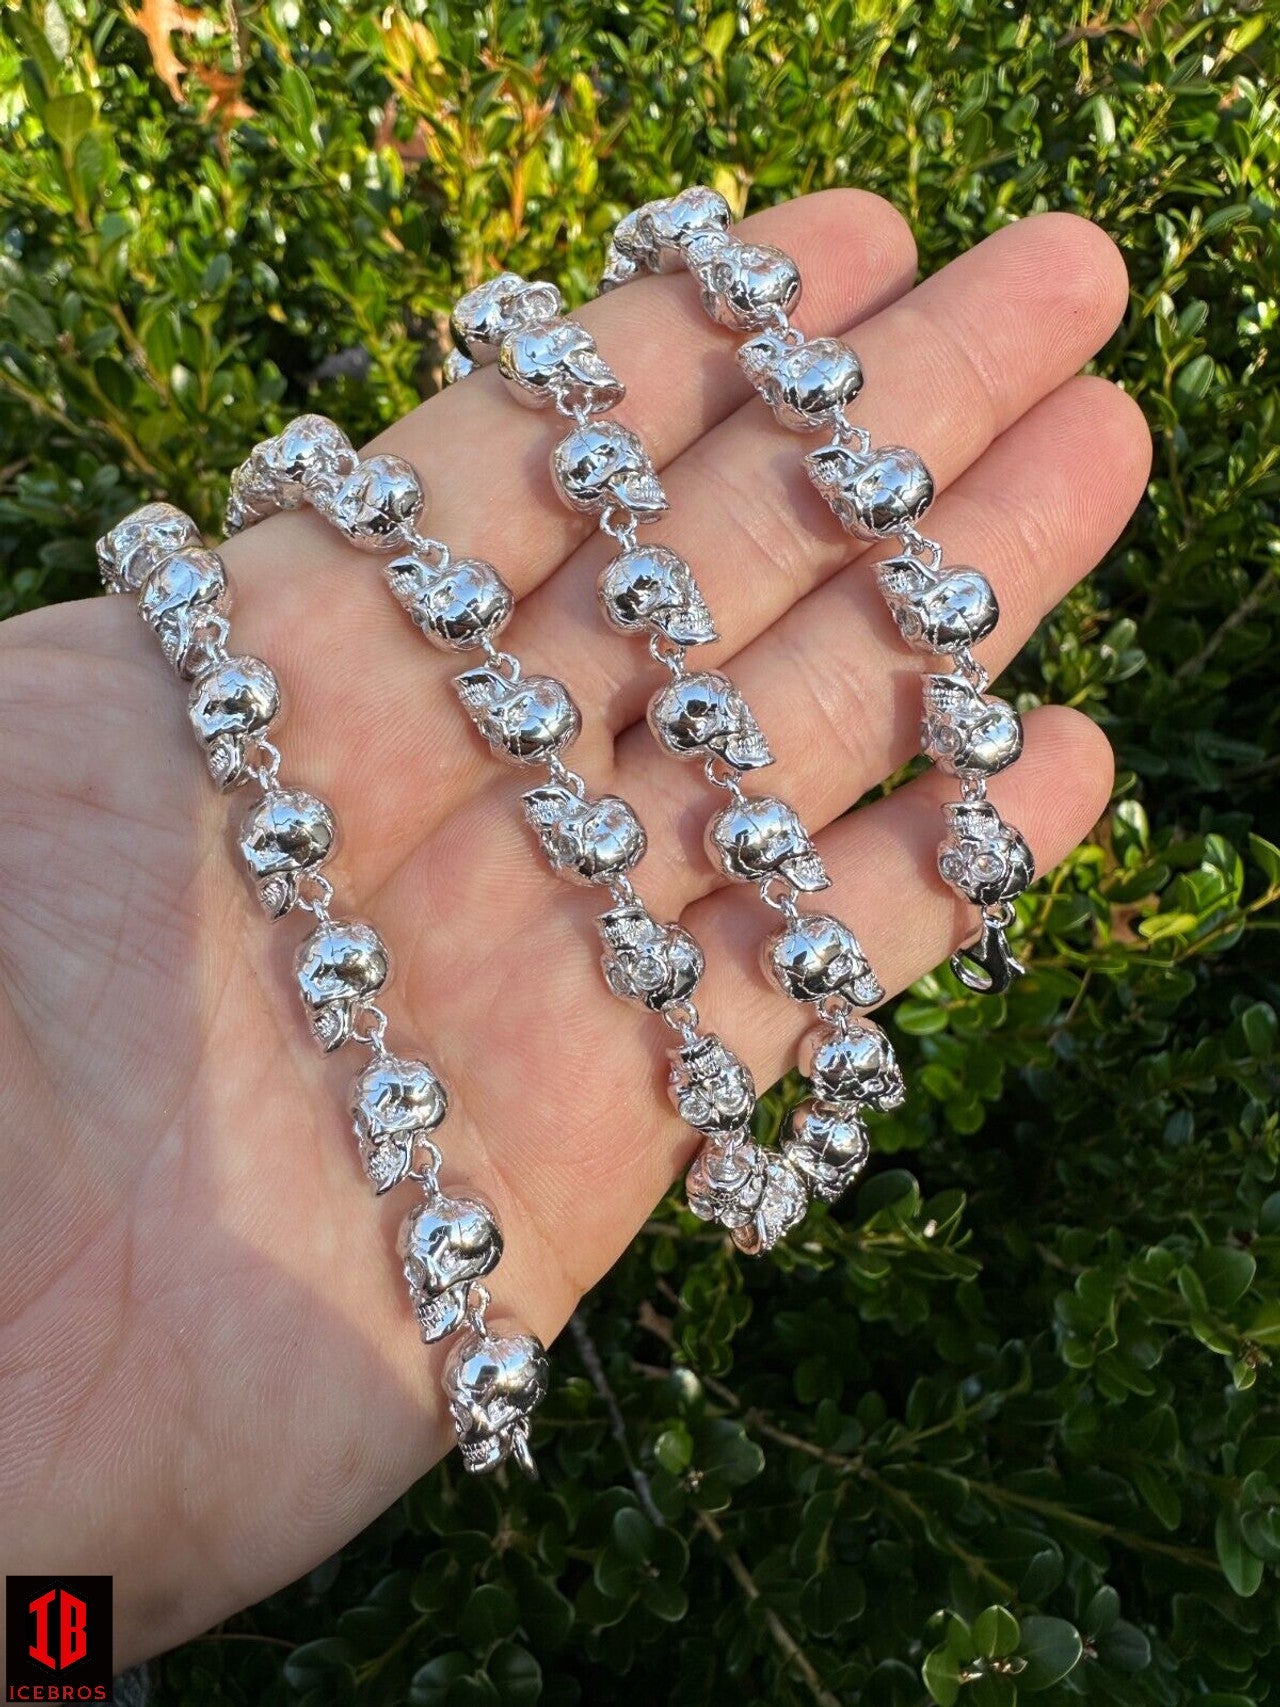 Solild 925 Sterling Skull Chain Around Men's Hand